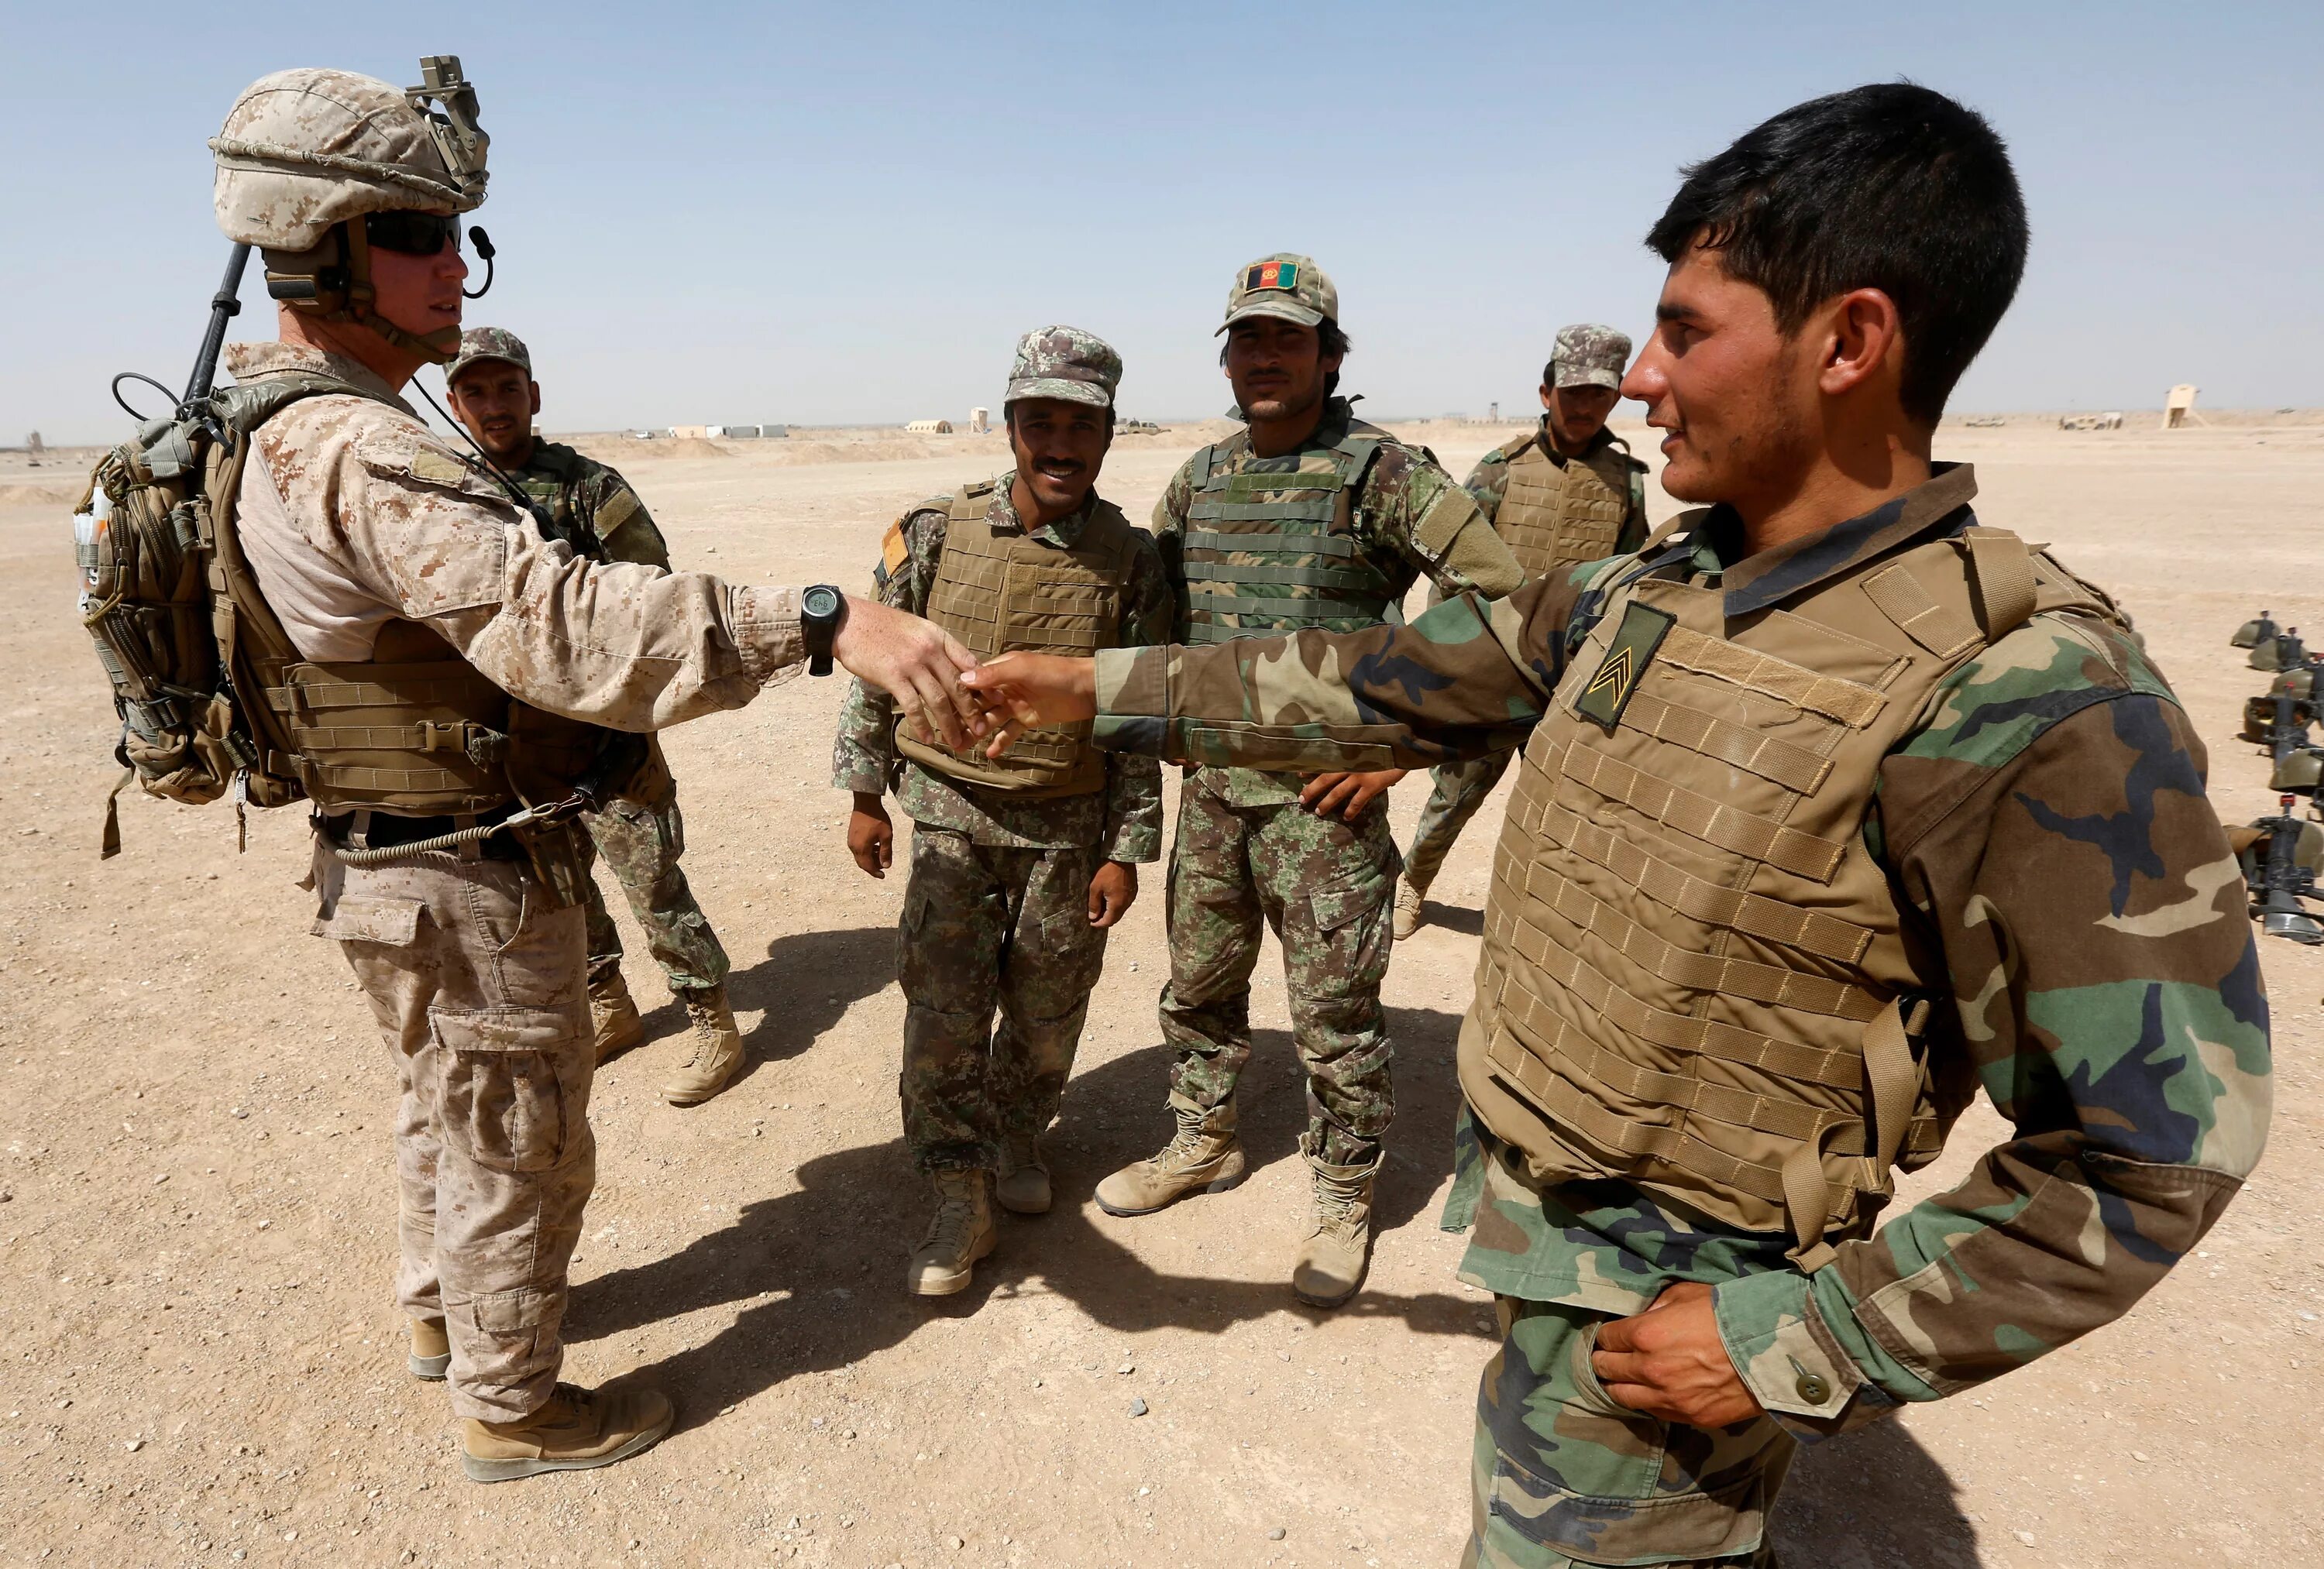 Солдат армии США В Афганистане. Американские войска в Афганистане. Армия США В Афганистане 2001. Американцы в Афганистане 2001. Американские военные афганистан